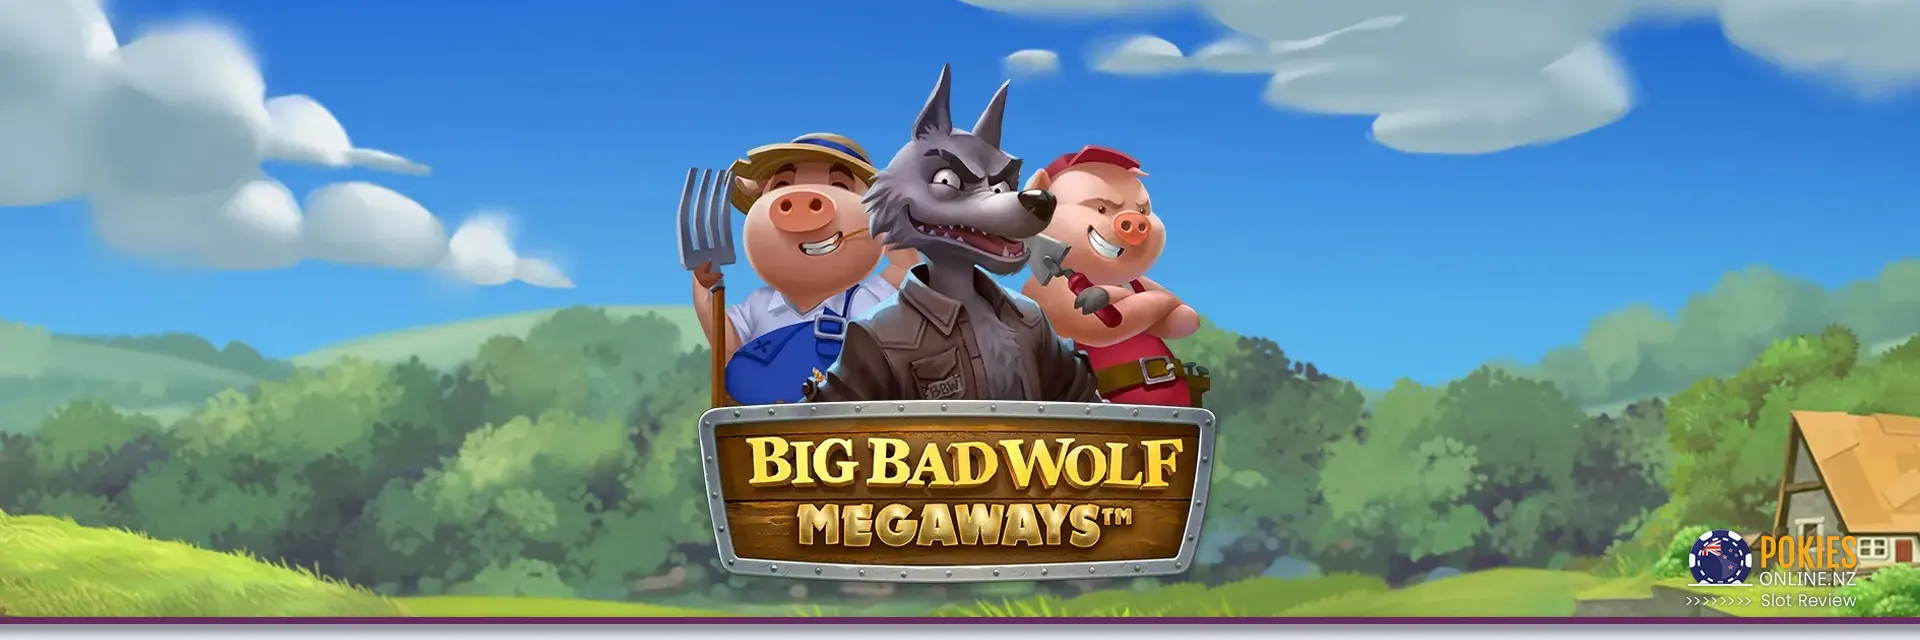 Big Bad wolf slot banner